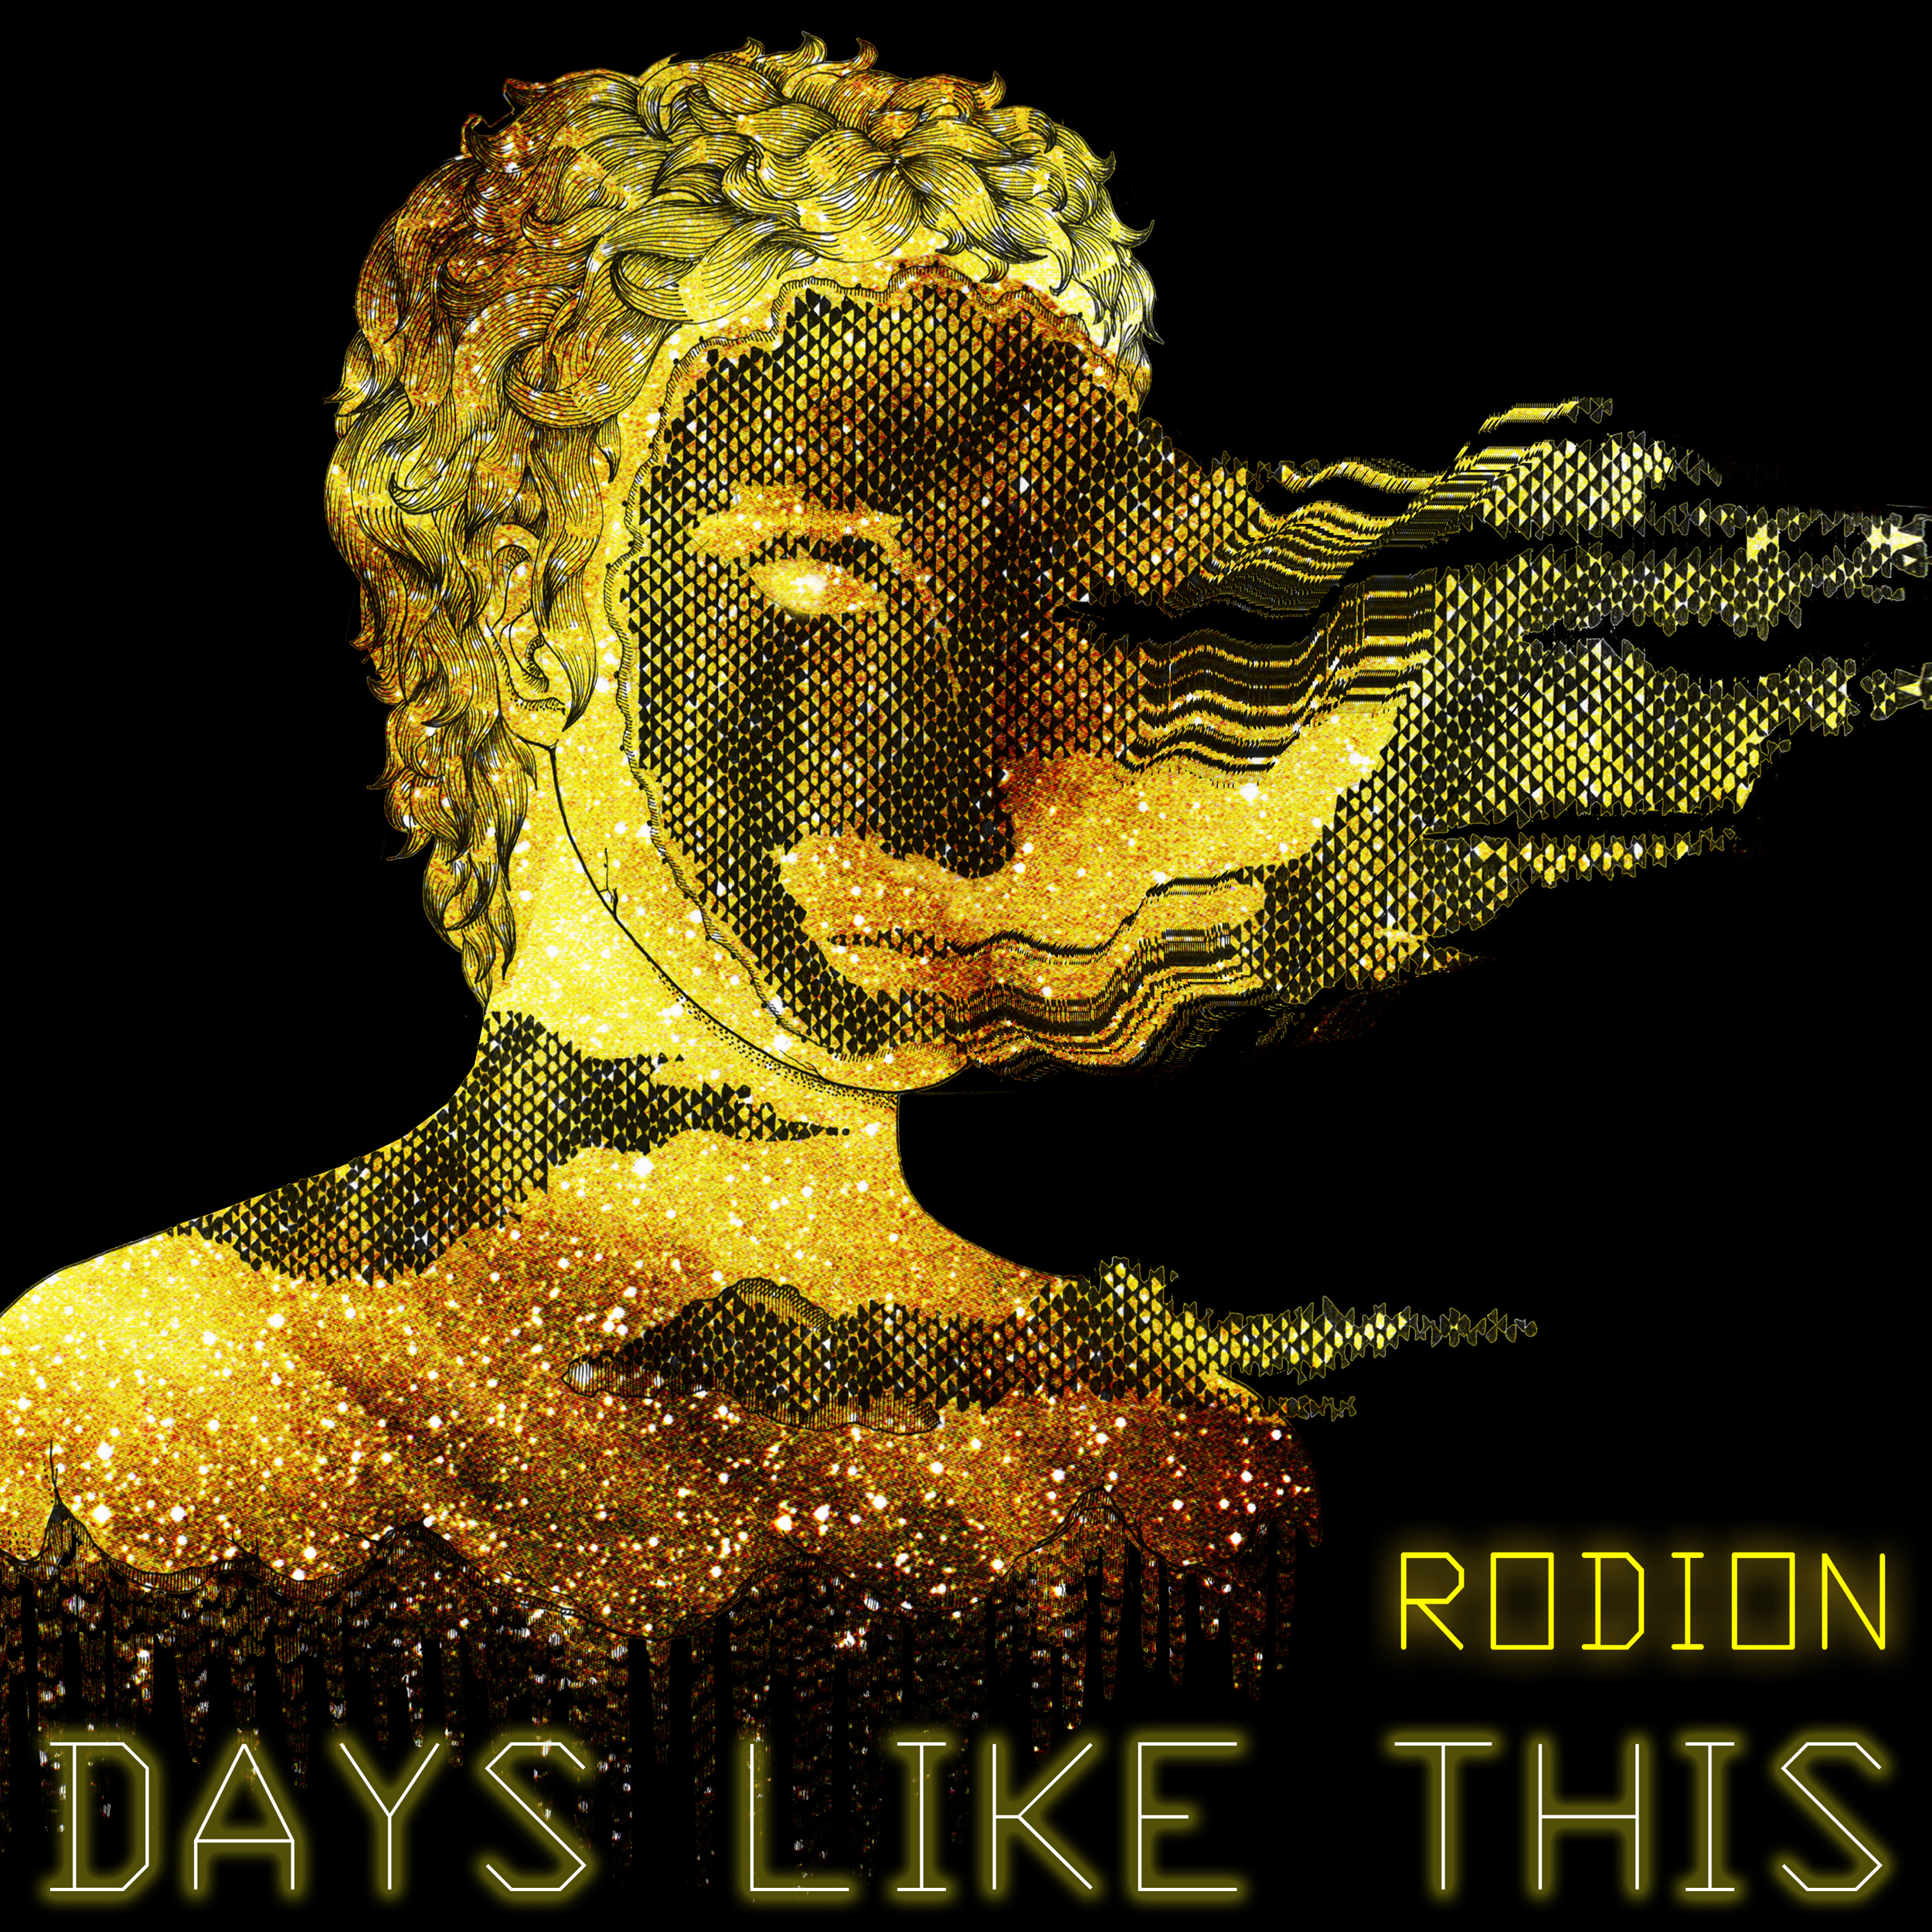 rodion_days_like_this_-_rocco_012_artwork_2500x2500_75dpi.jpg